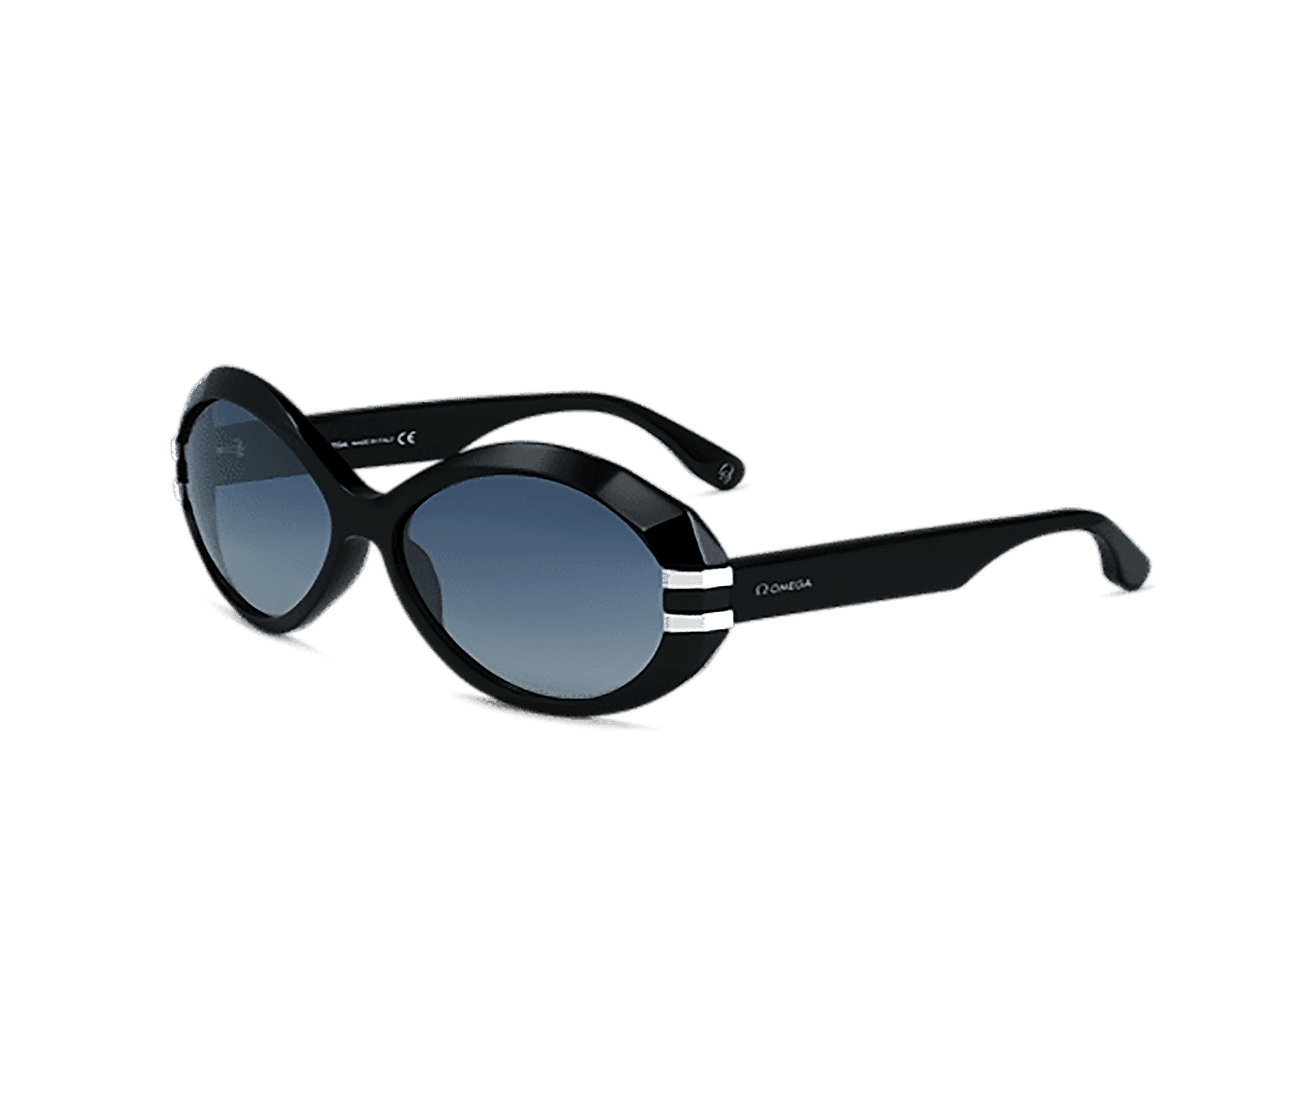 Buy LORENZ Gift Set Combo of Brown Analog Watch Sunglasses & Wallet for Men  | CM-3092SN13-WL-56 at Amazon.in